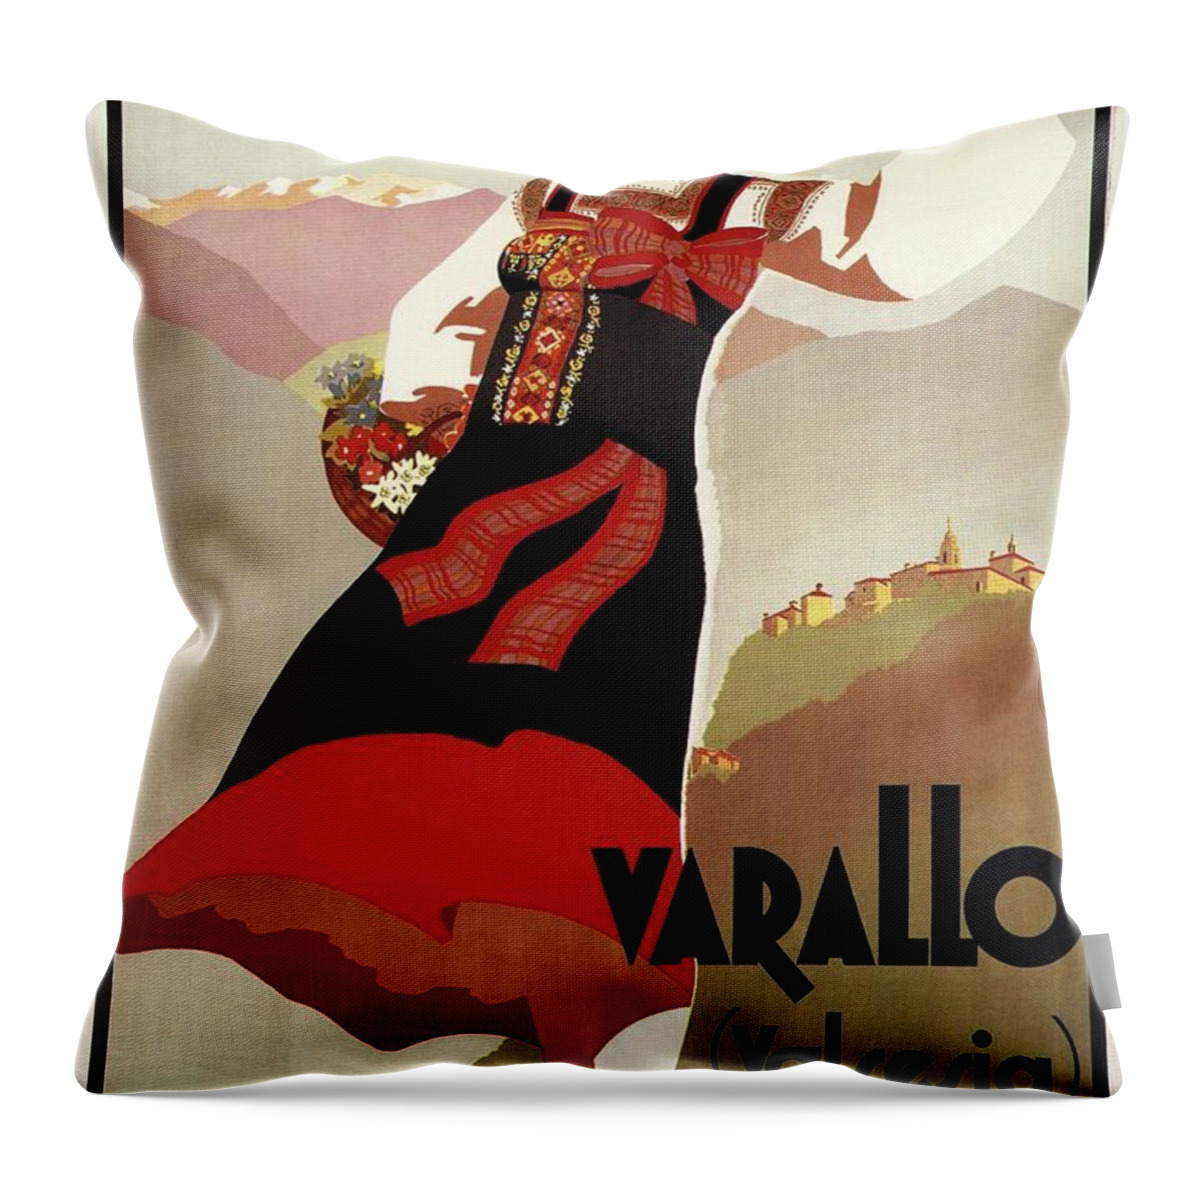 Varallo Throw Pillow featuring the mixed media Varallo, Valsesia, Italy - Woman in Traditional Dress - Retro travel Poster - Vintage Poster by Studio Grafiikka